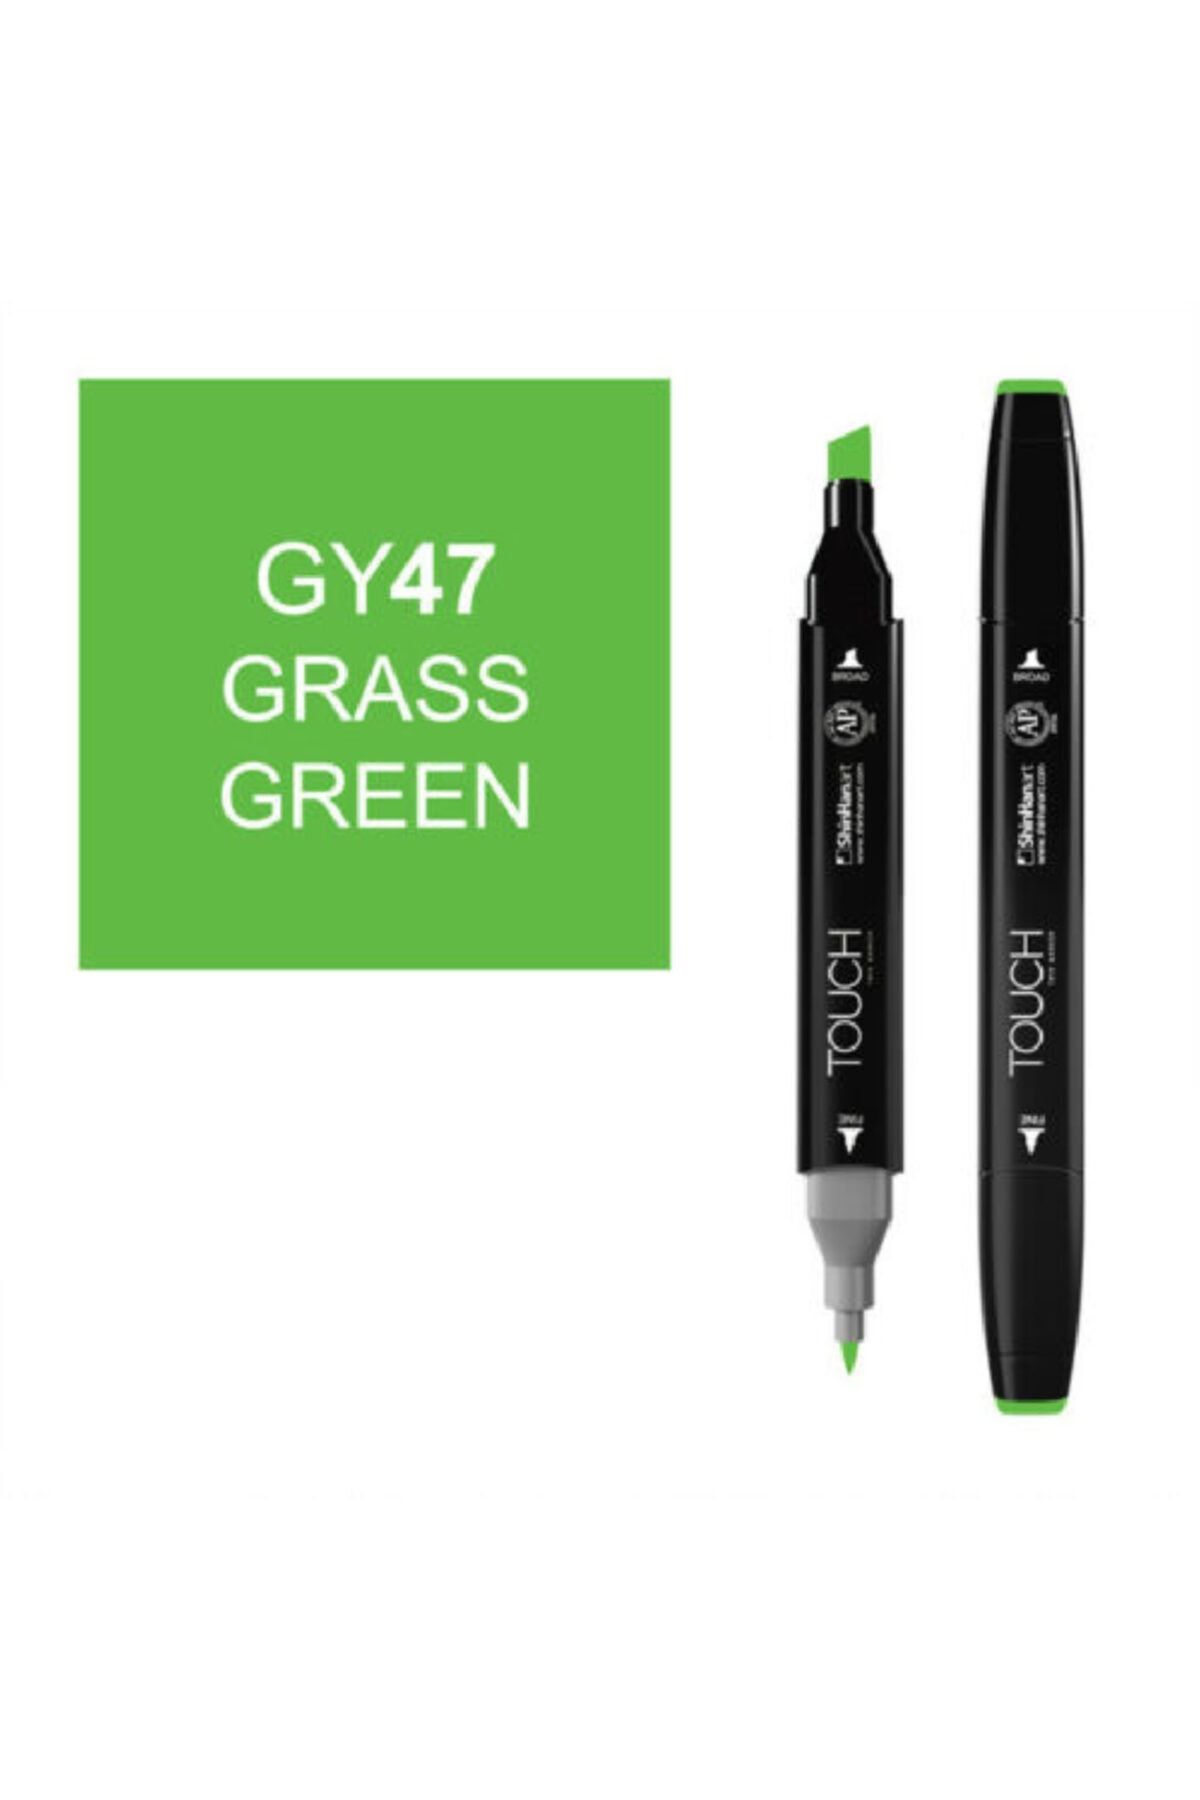 Ponart Touch Twin Gy47 Grass Green Marker Sh1110047